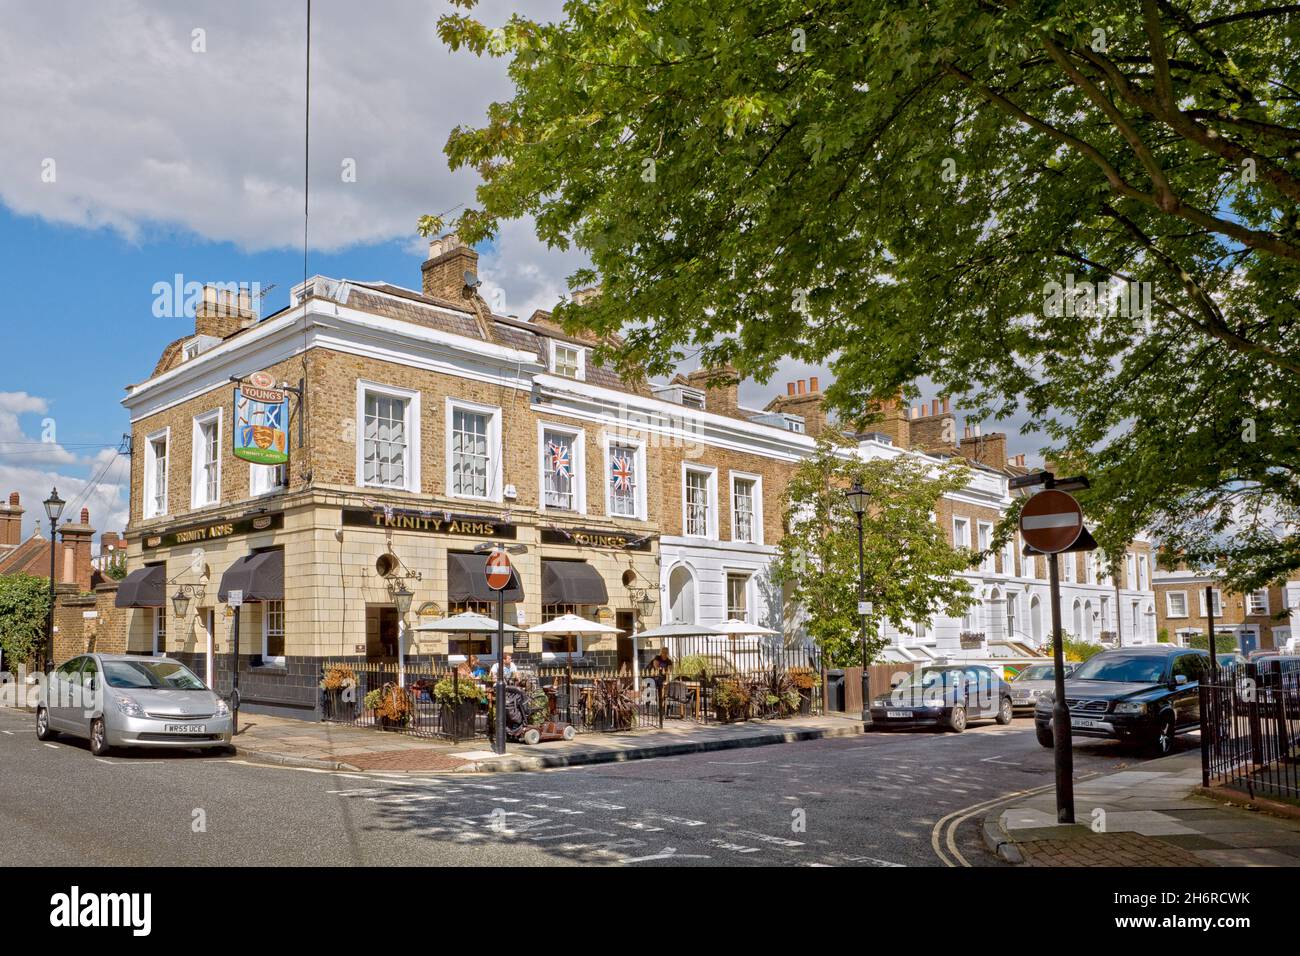 Trinity Arms, Brixton, London Stockfoto